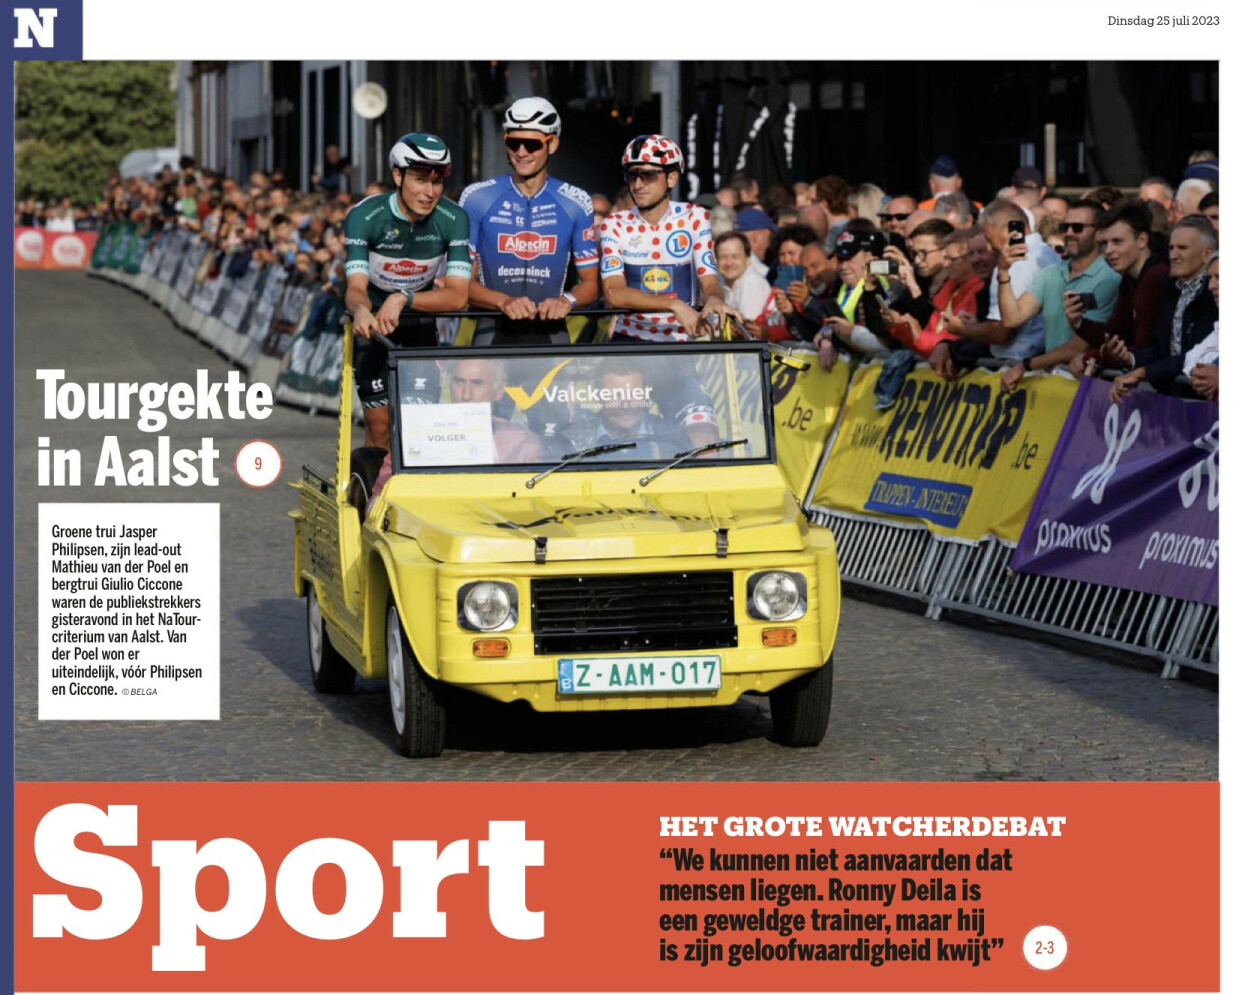 Natourcriterium sport nieuwsblad